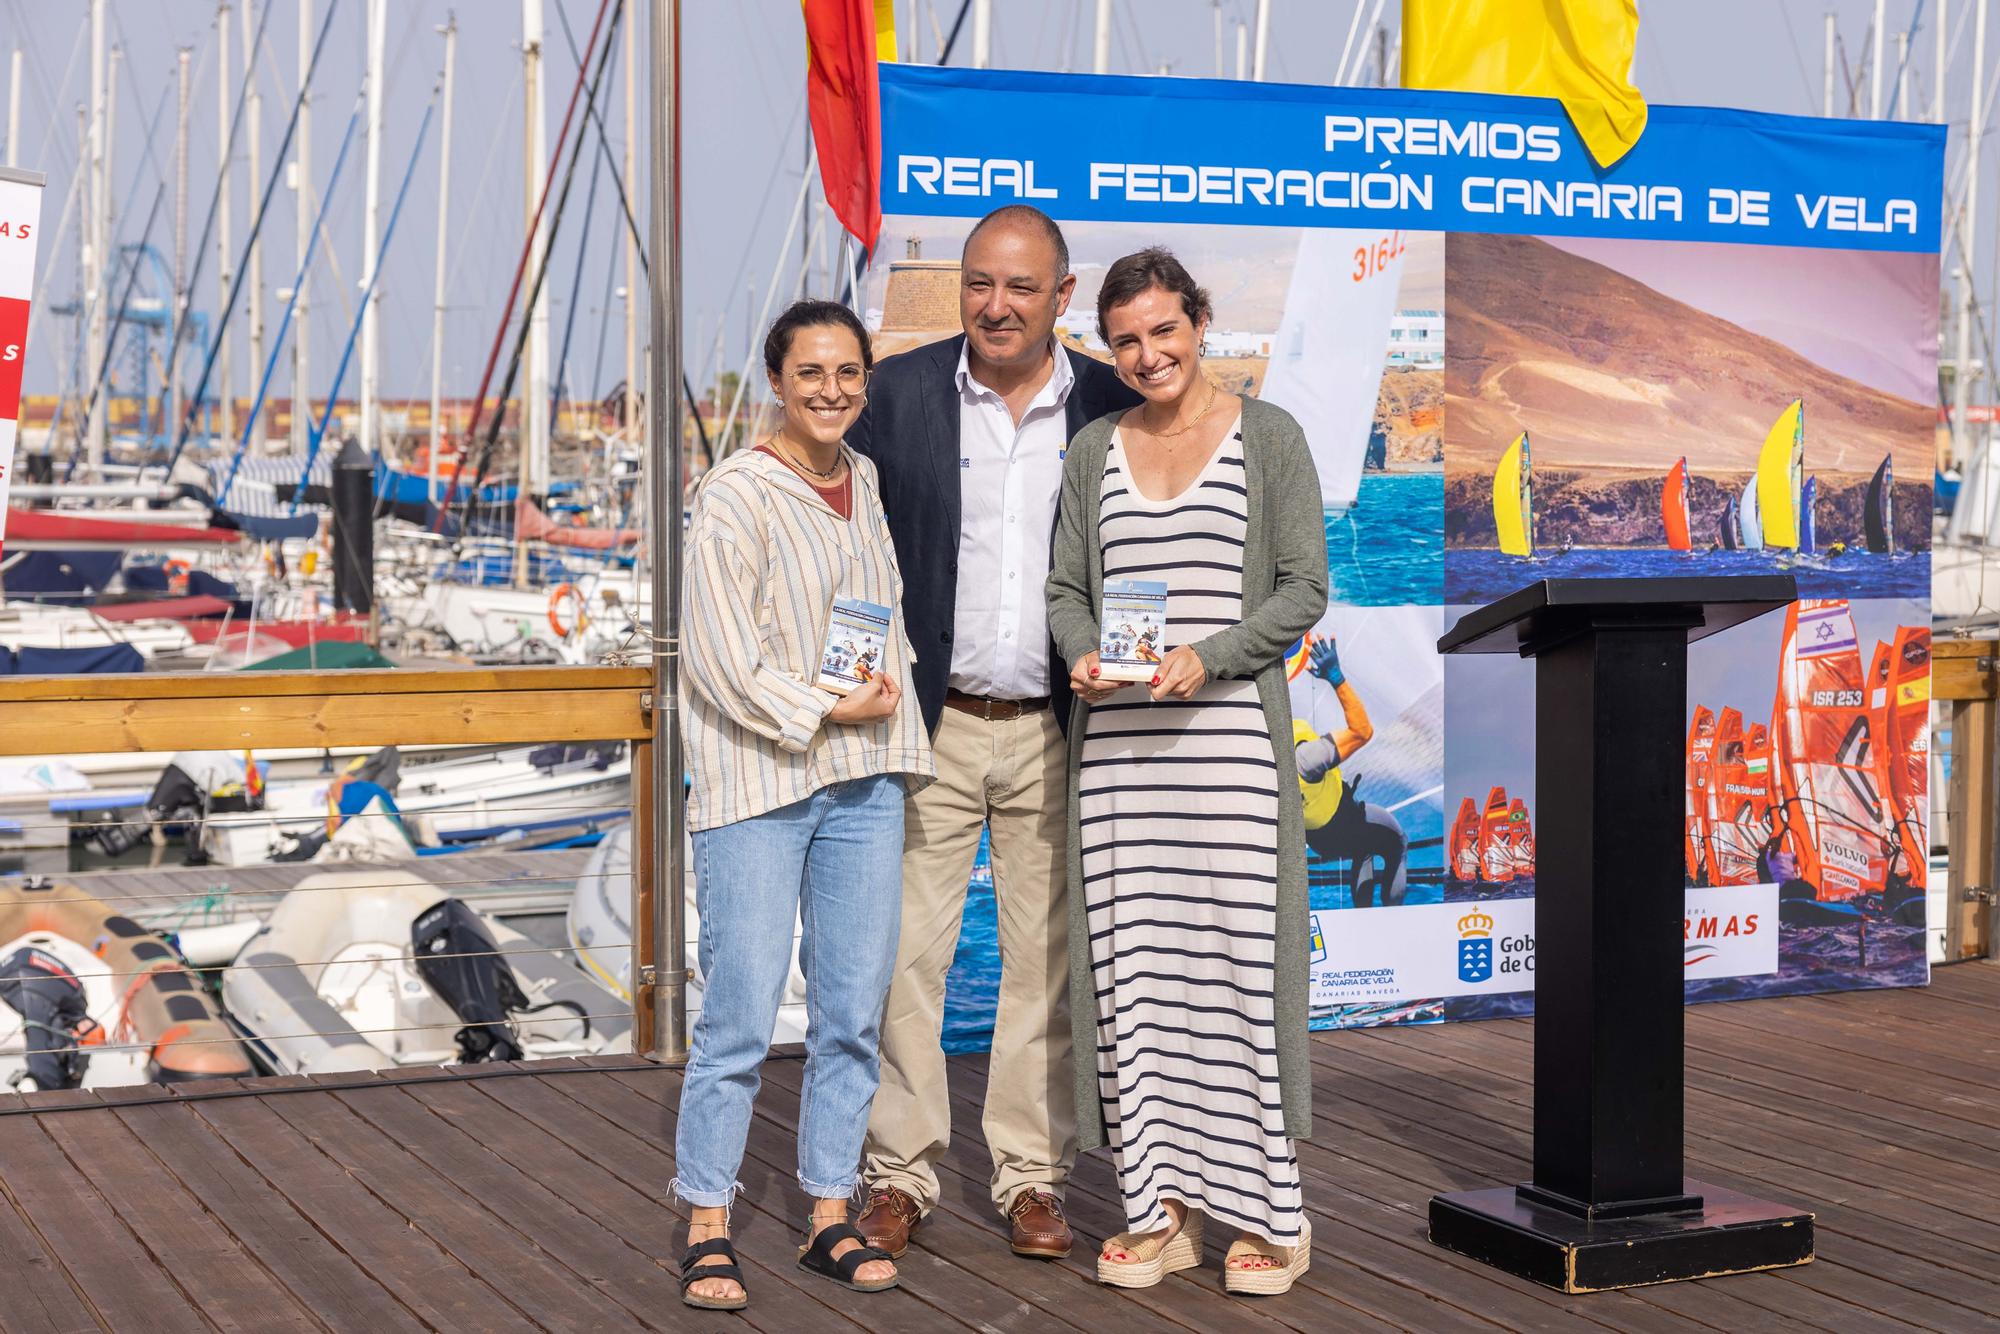 Premios Real Federación Canaria de Vela